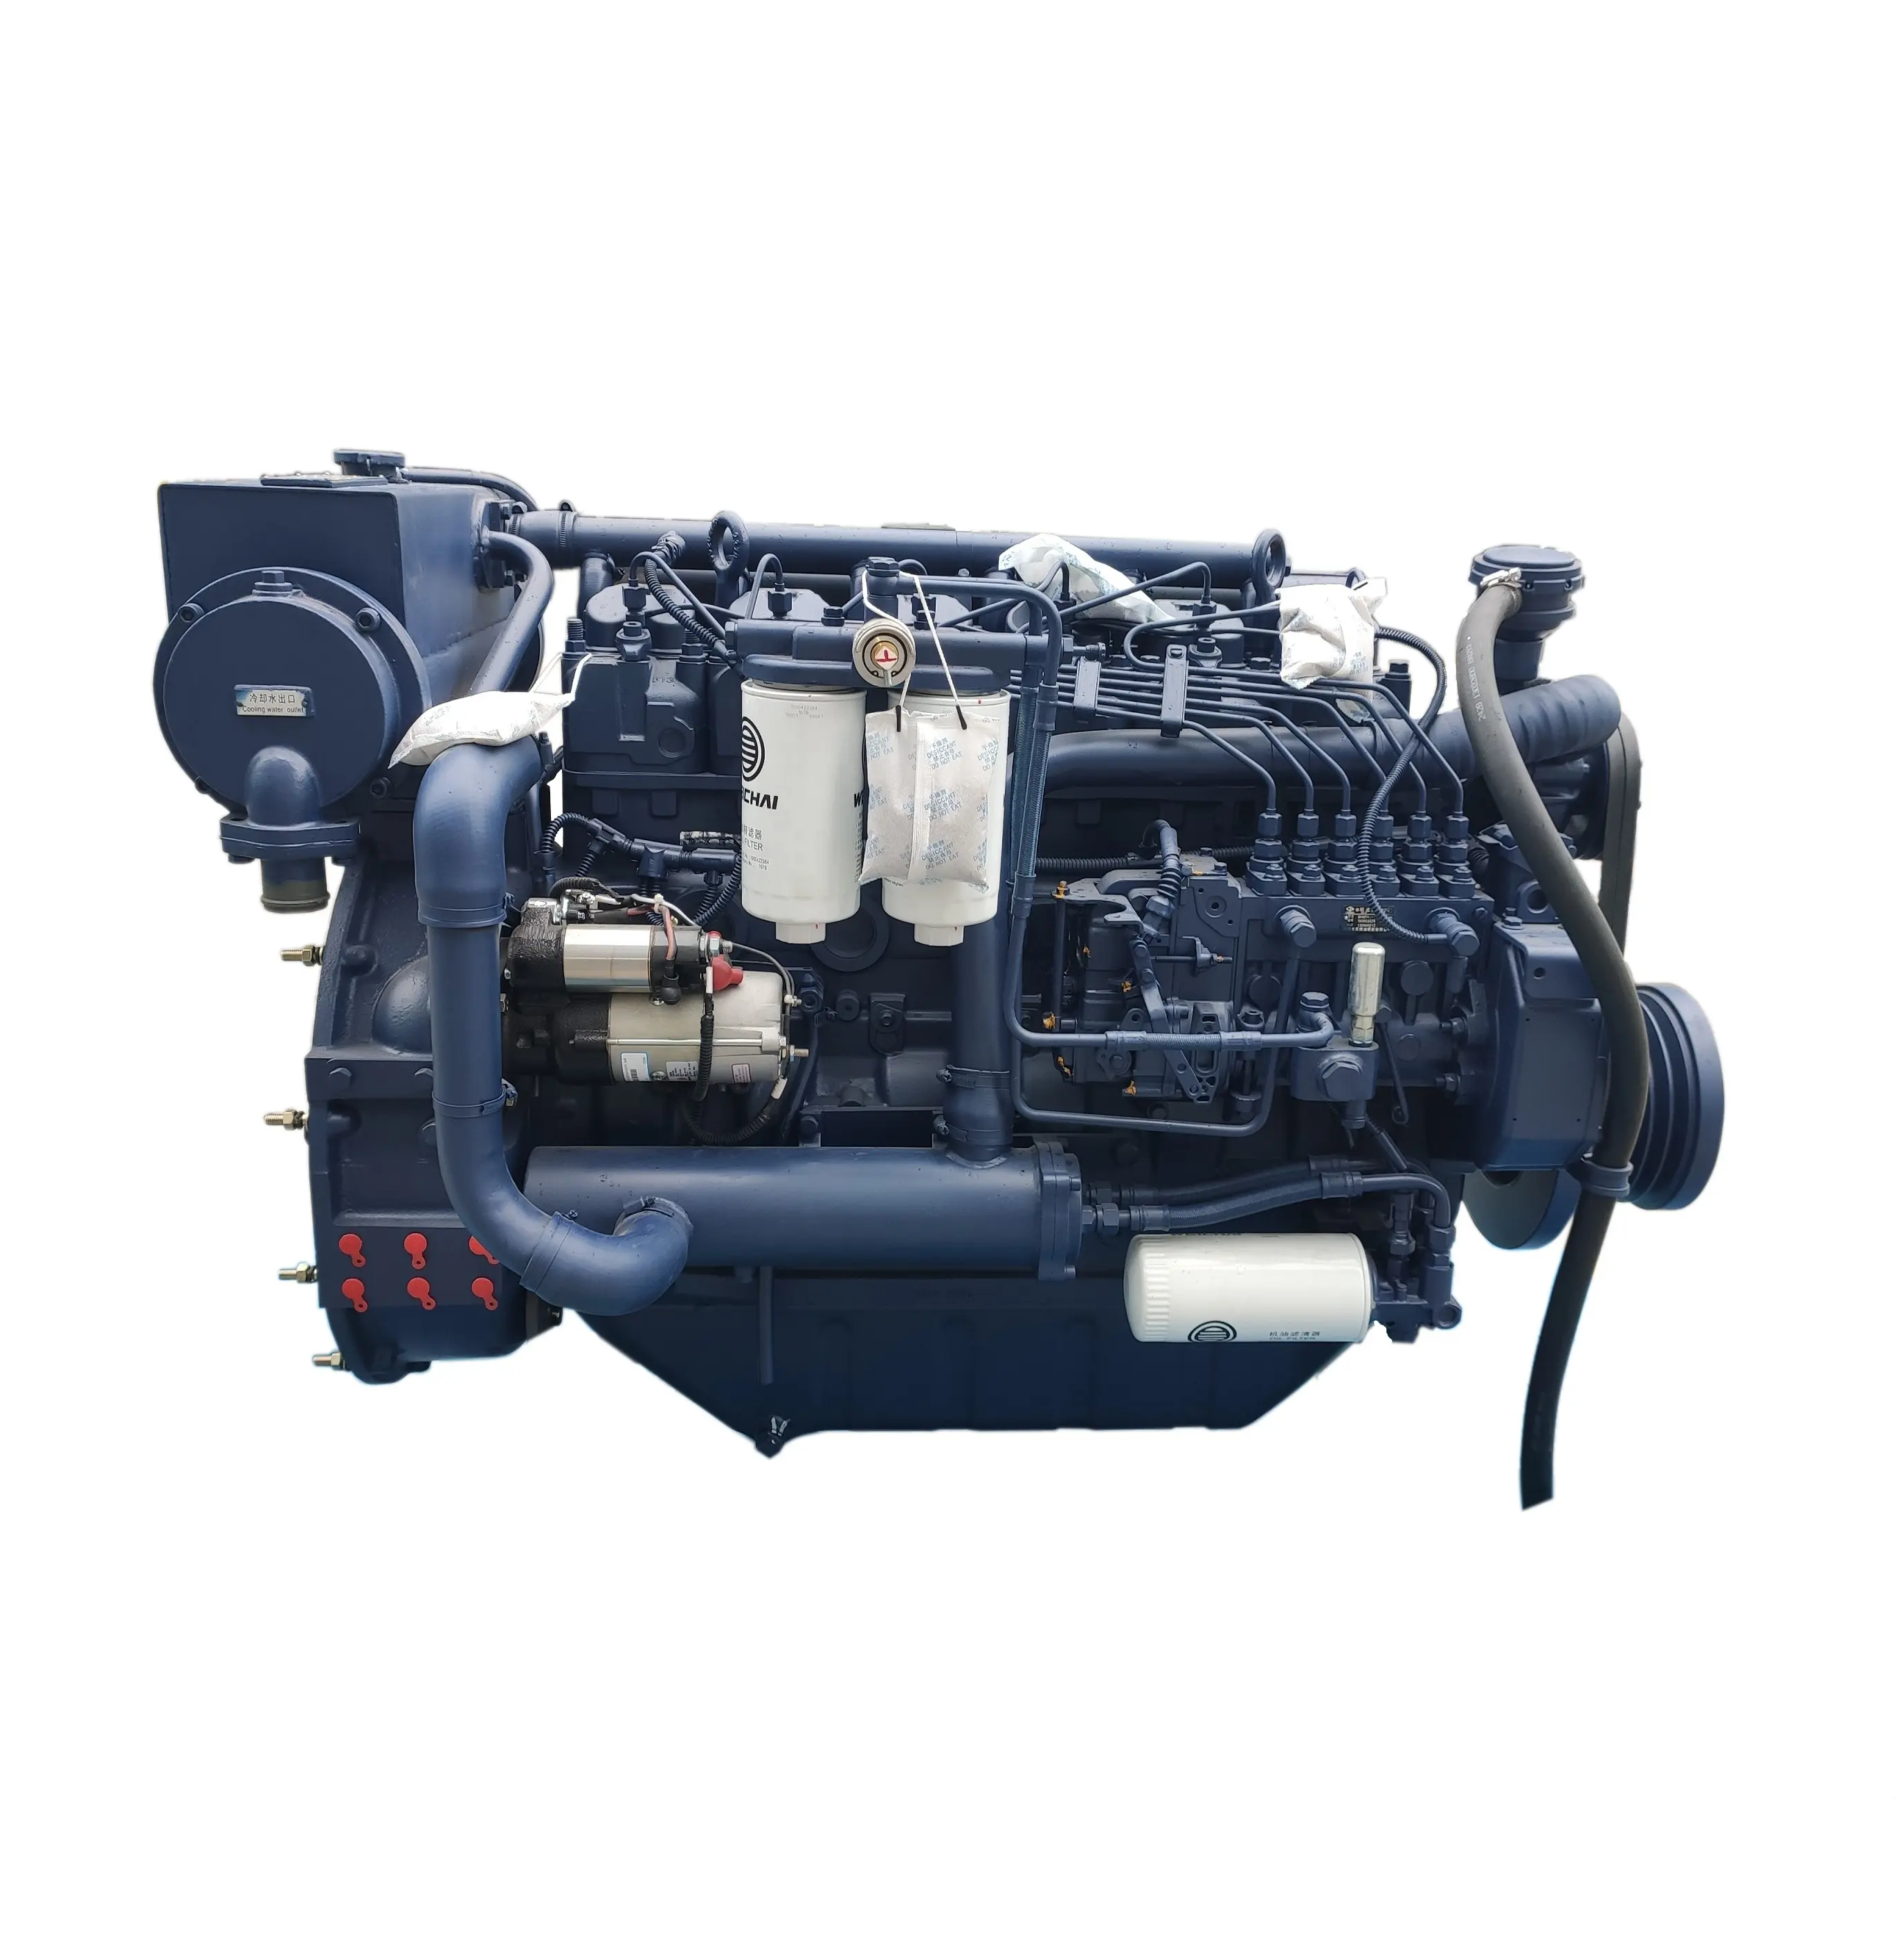 Weichai-motor marino diésel original, 6 cilindros, WP6C220-23, 220hp